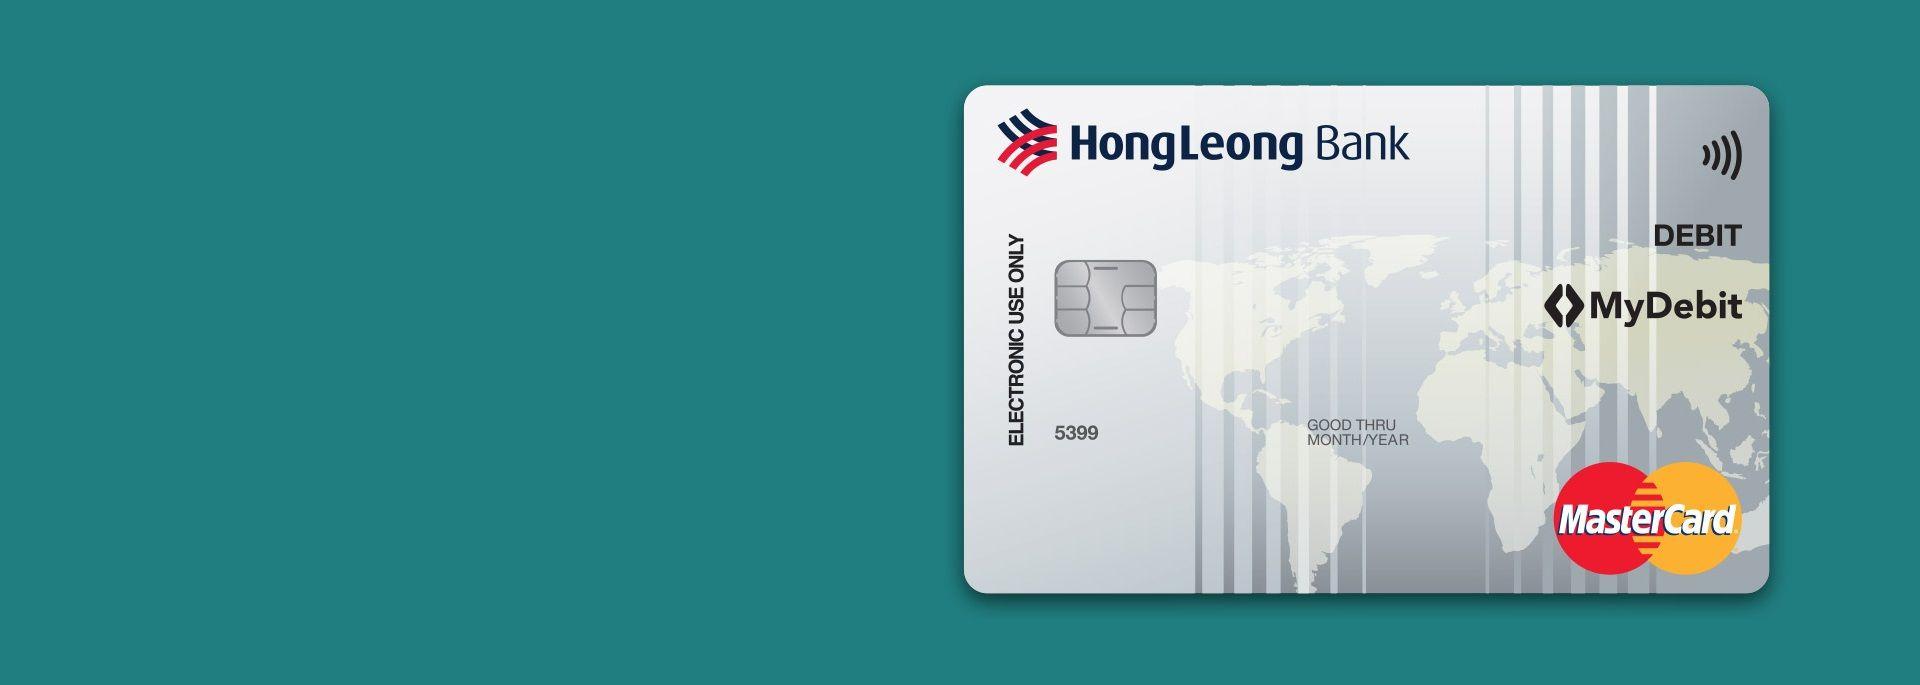 Generic Bank Logo - Hong Leong Bank Malaysia